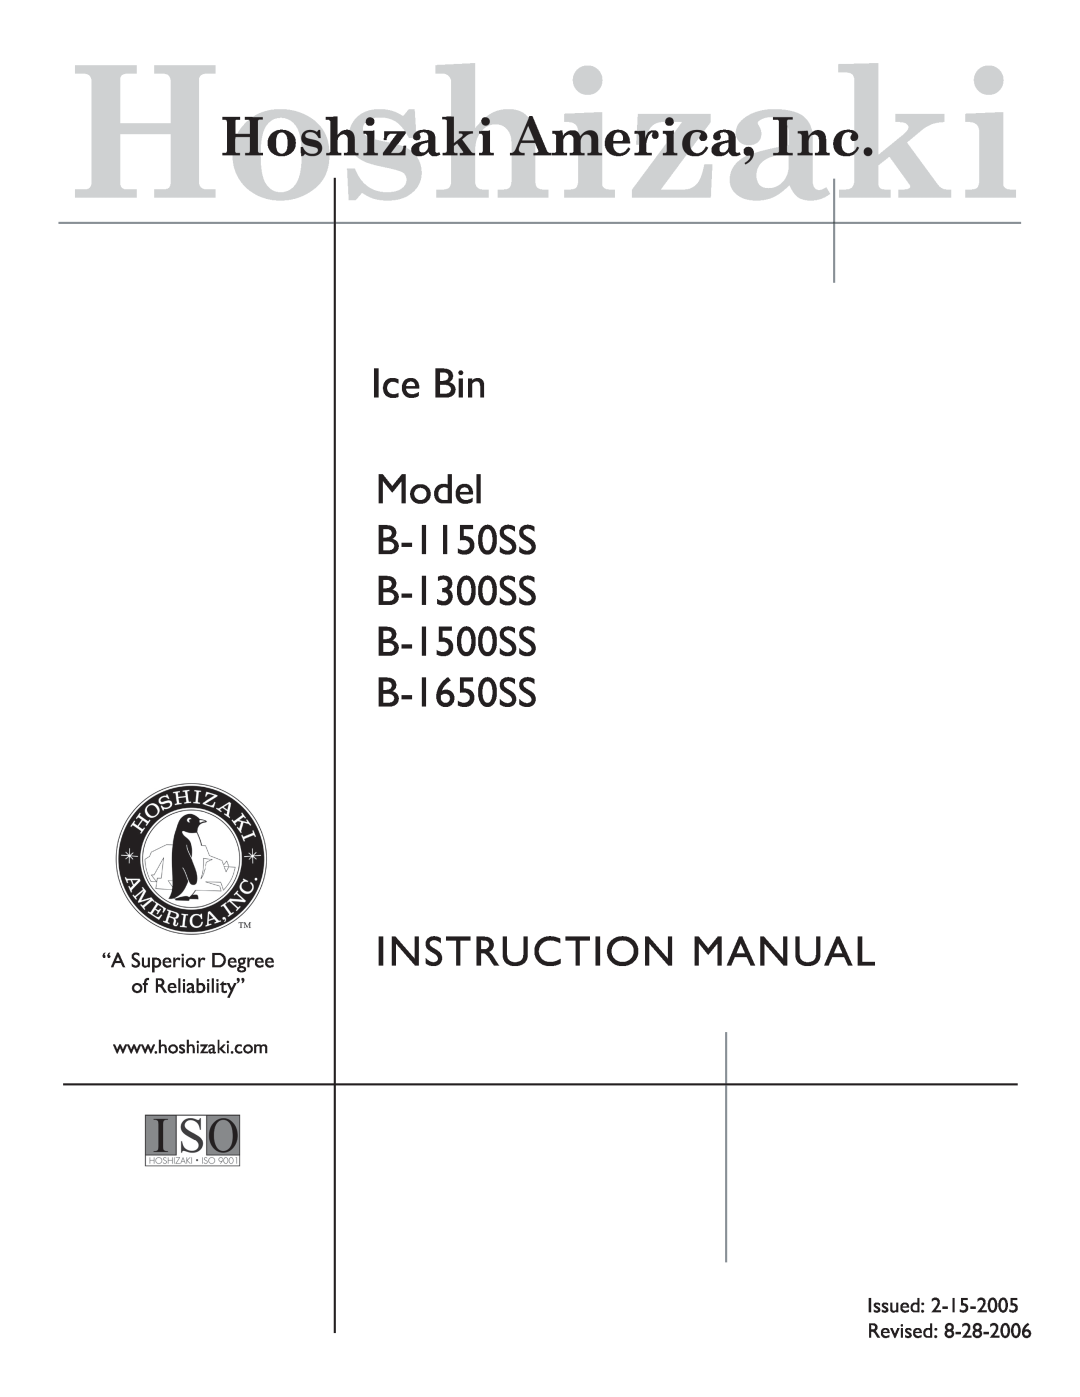 Hoshizaki instruction manual Ice Bin Model B-1150SS B-1300SS B-1500SS B-1650SS, “A Superior Degree of Reliability” 